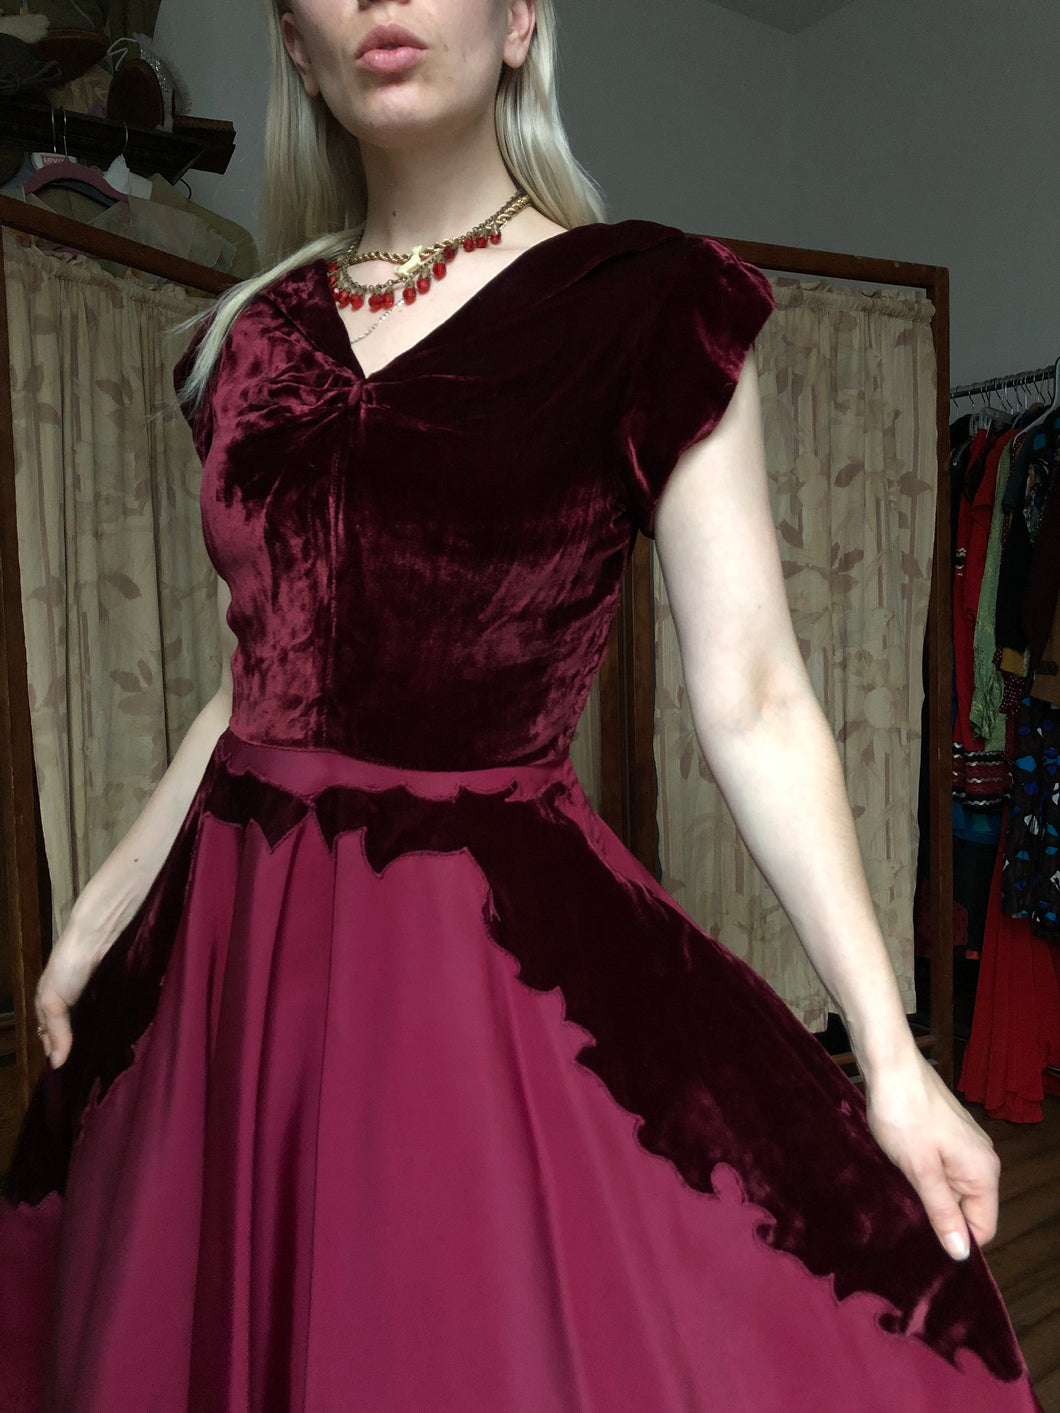 vintage 1940s evening dress {xs}